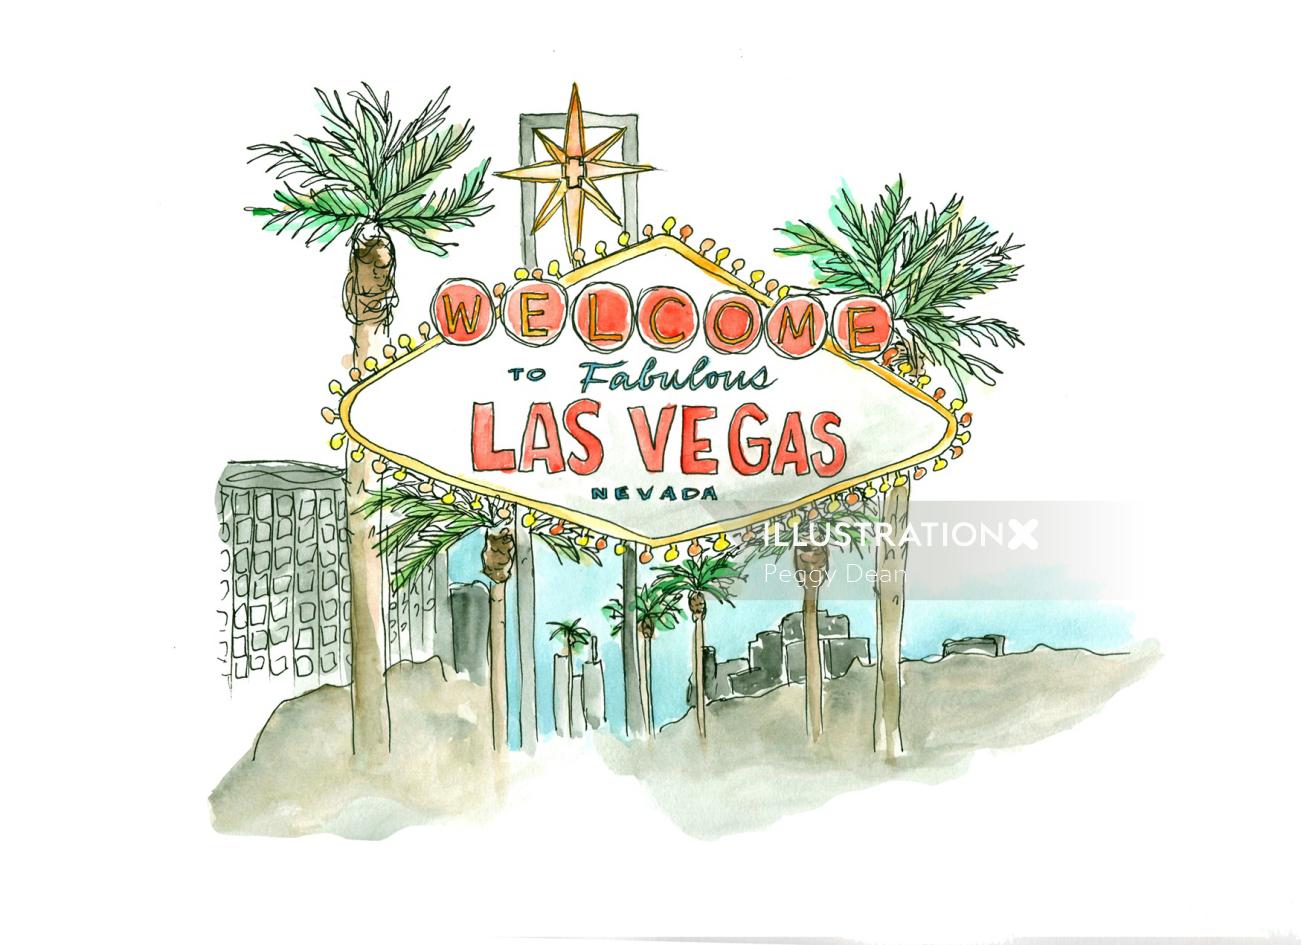 Bienvenido a la fabulosa Las Vegas Nevada